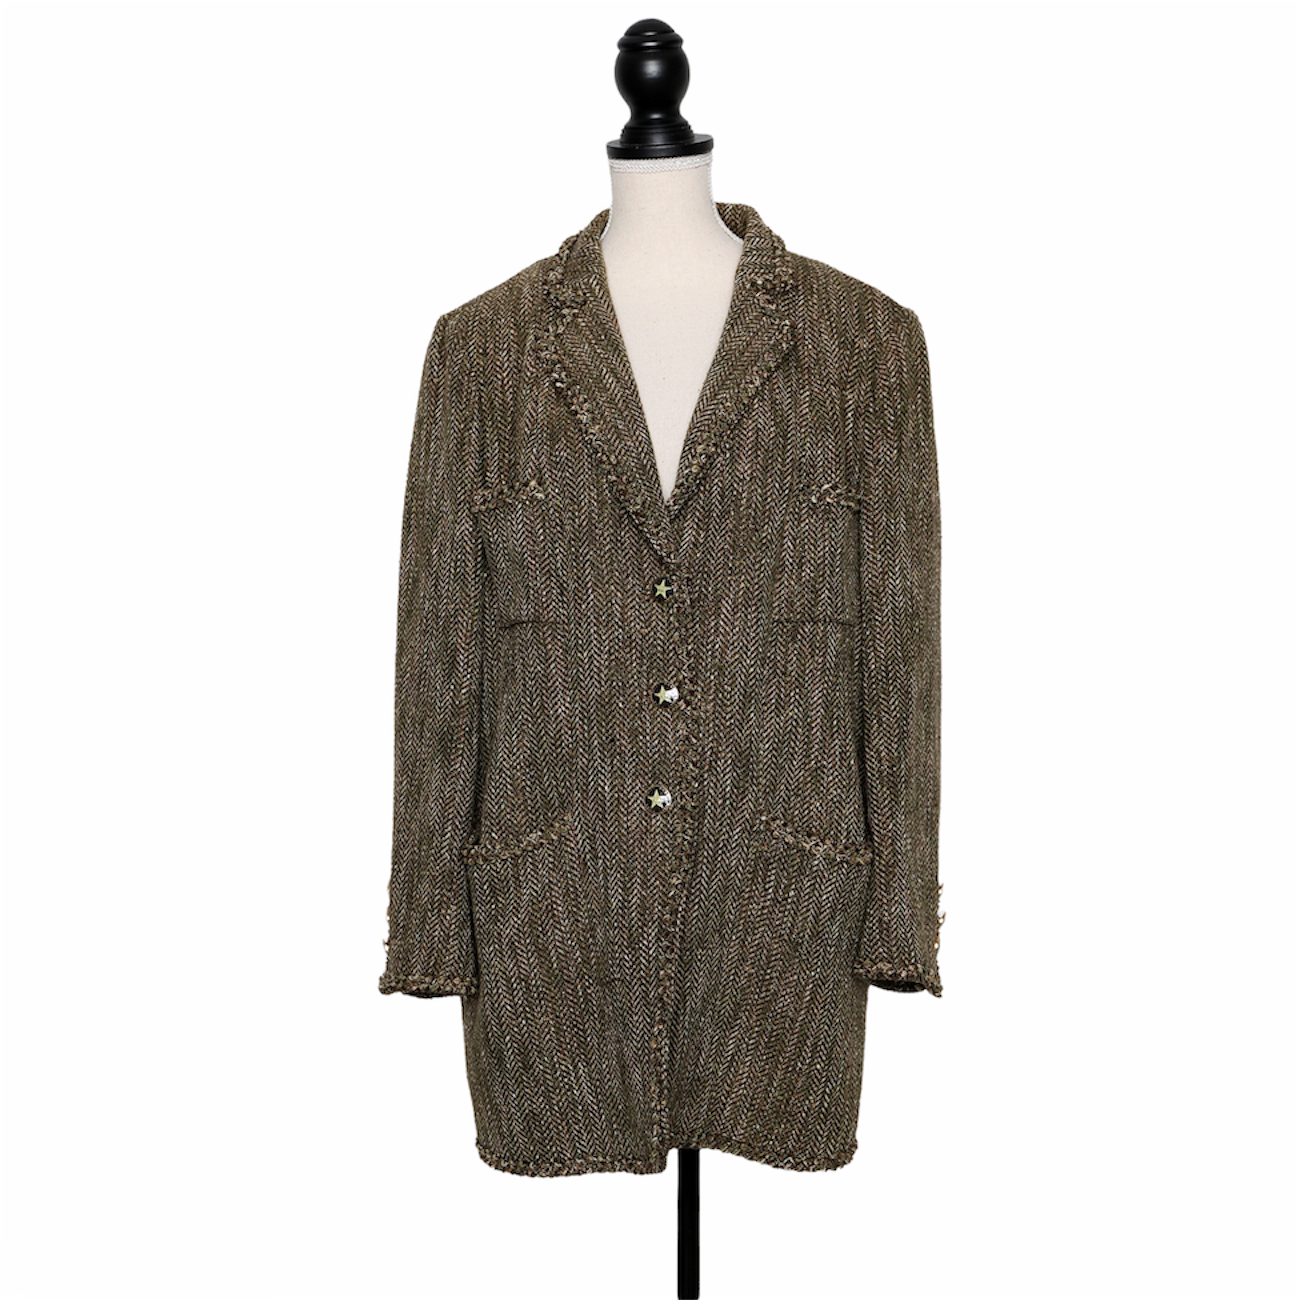 Rena vintage blazer in a traditional look